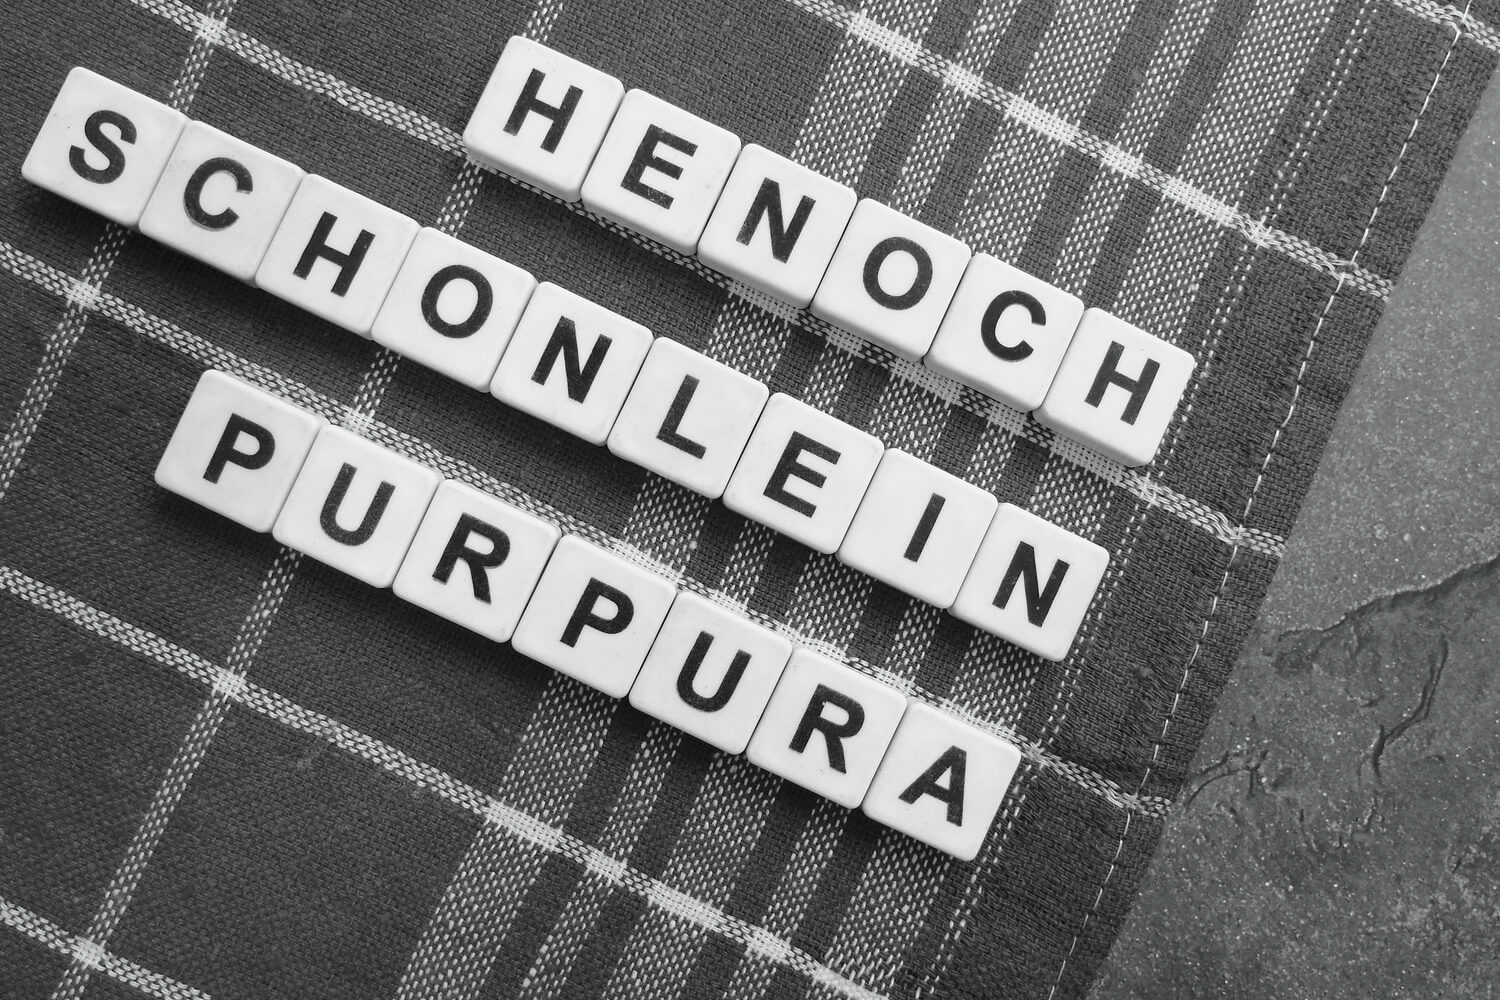 Henoch Schonlein Purpura